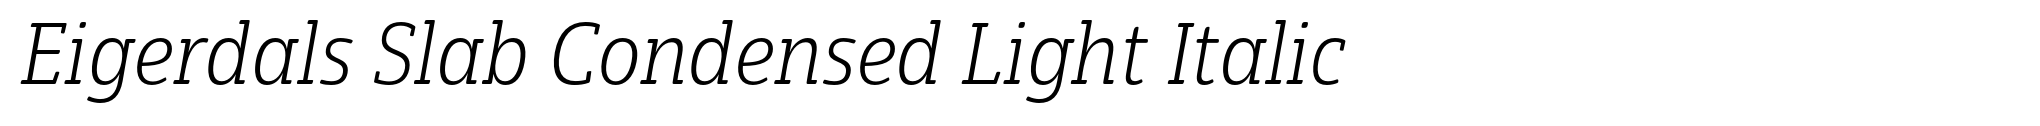 Eigerdals Slab Condensed Light Italic image